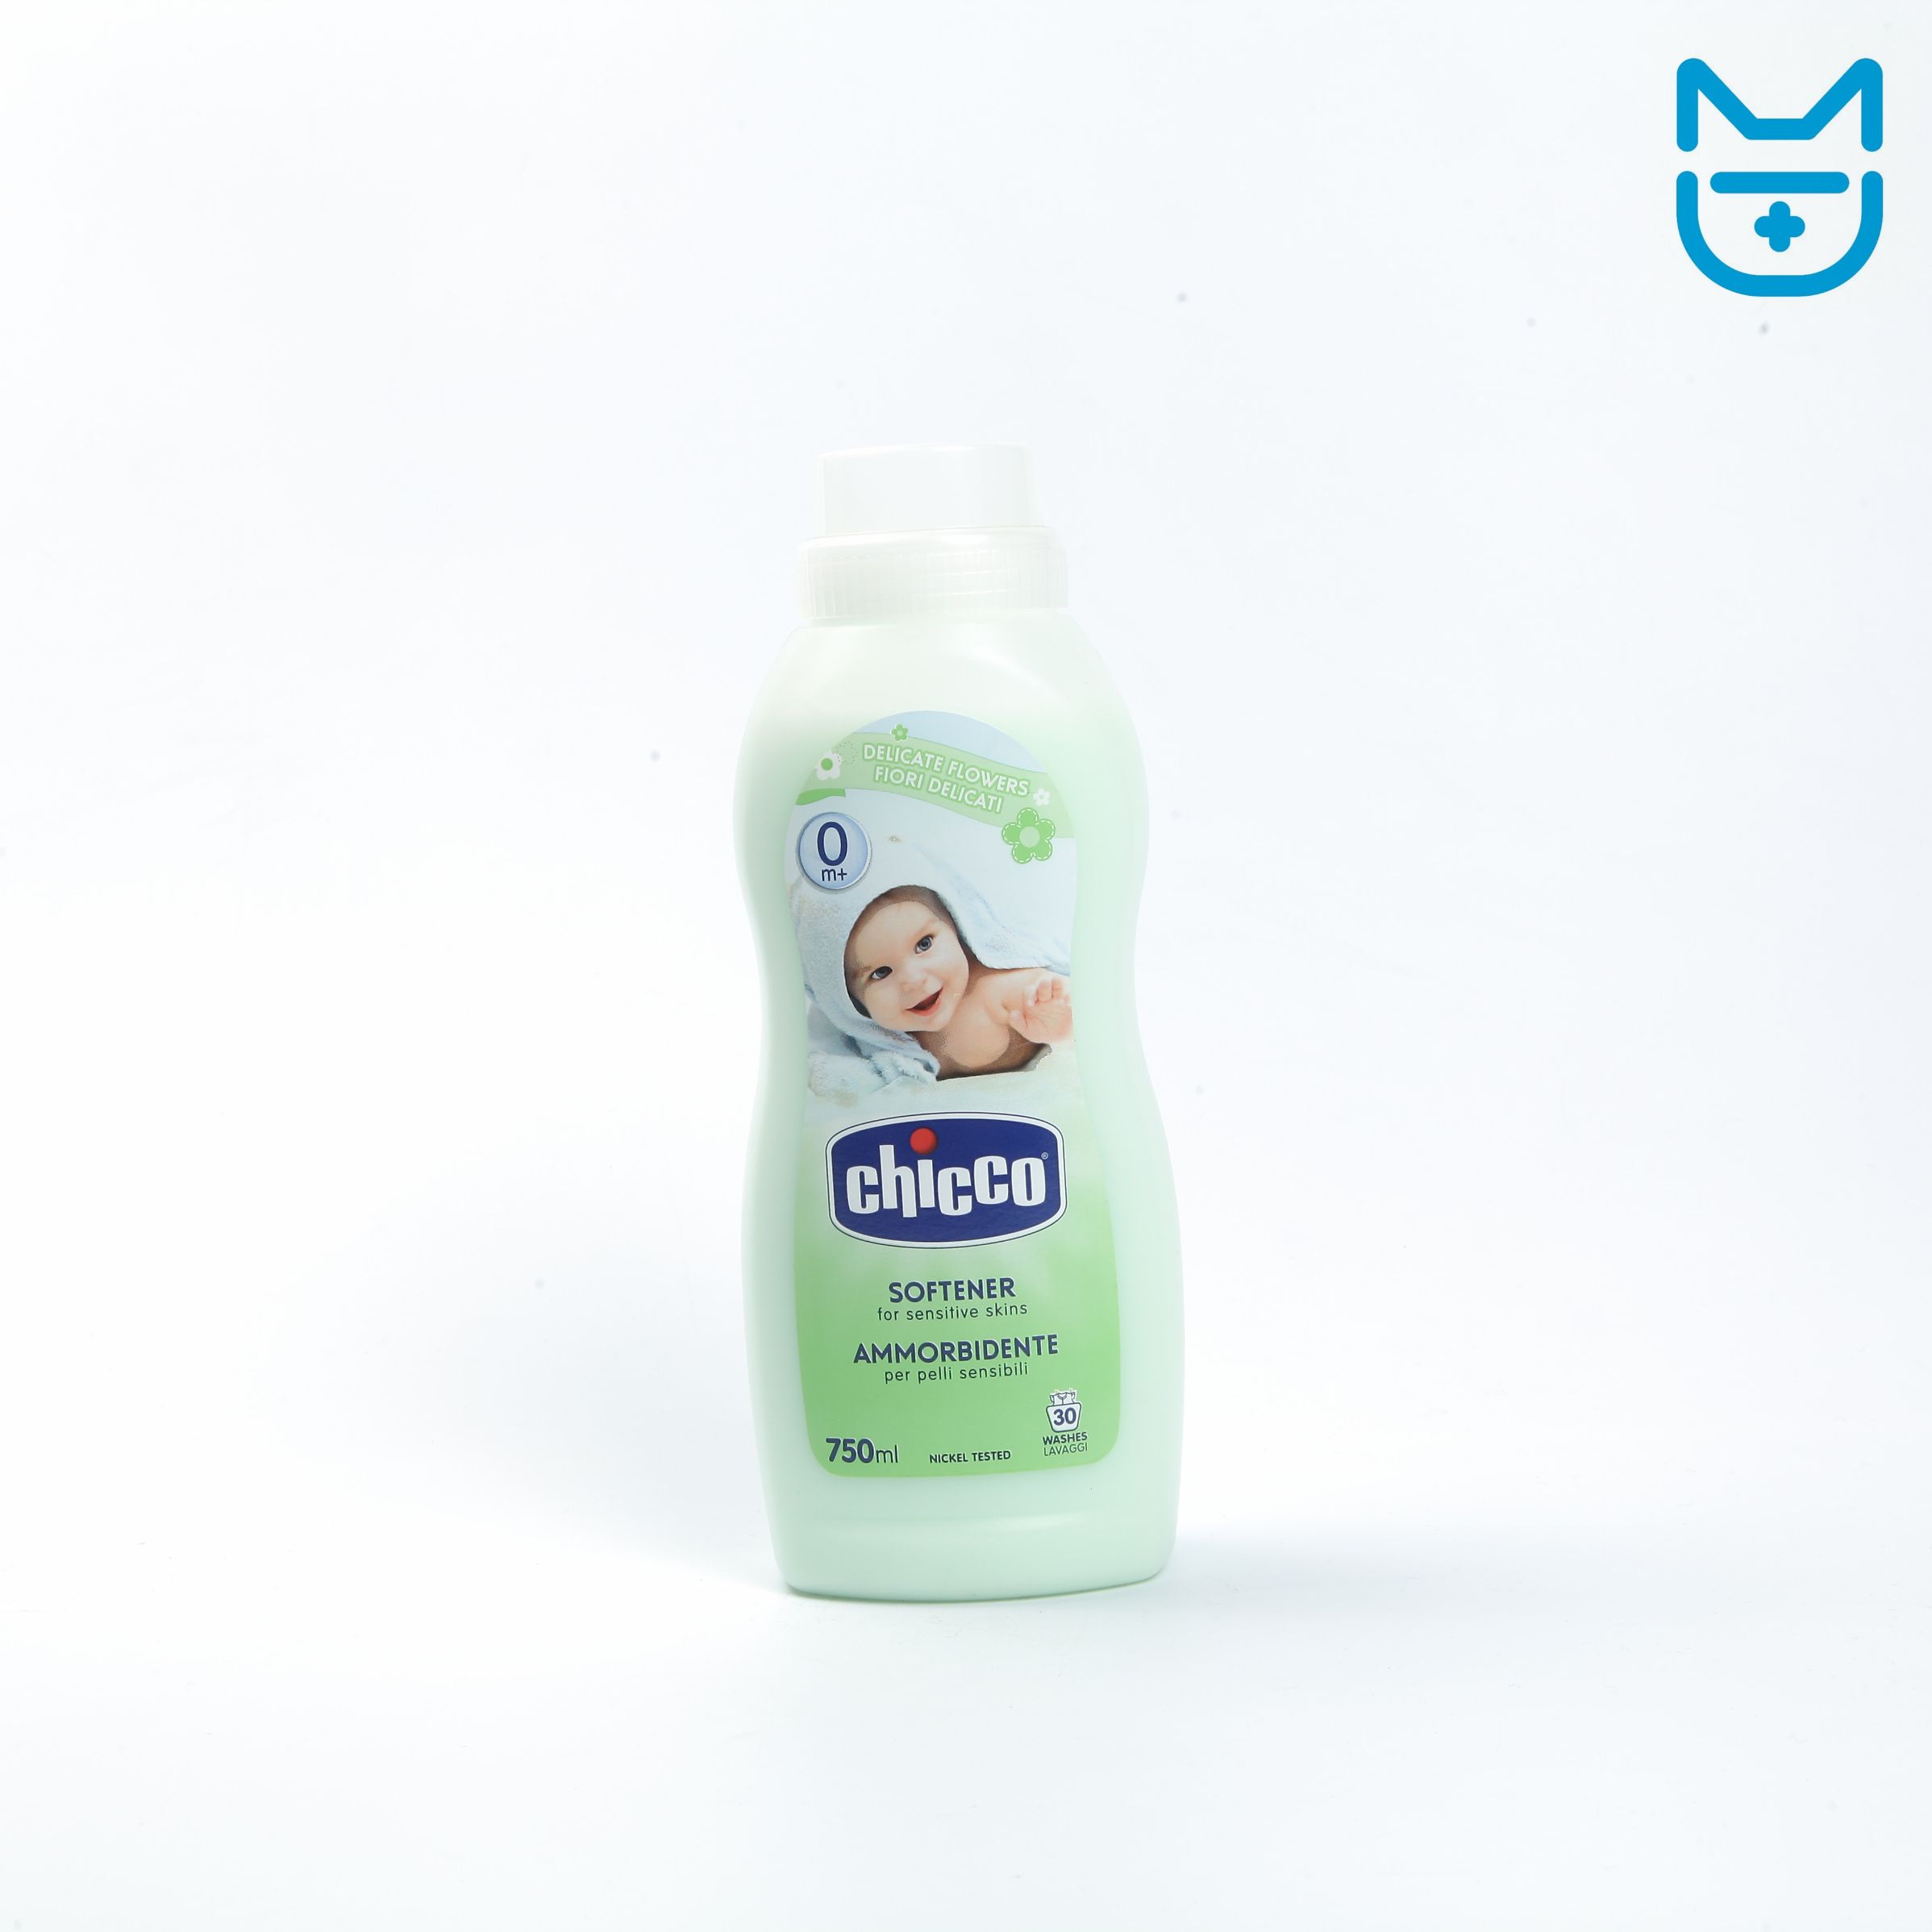 Chicco智高婴儿专用衣物浓缩柔顺剂液（花香型）详情图1